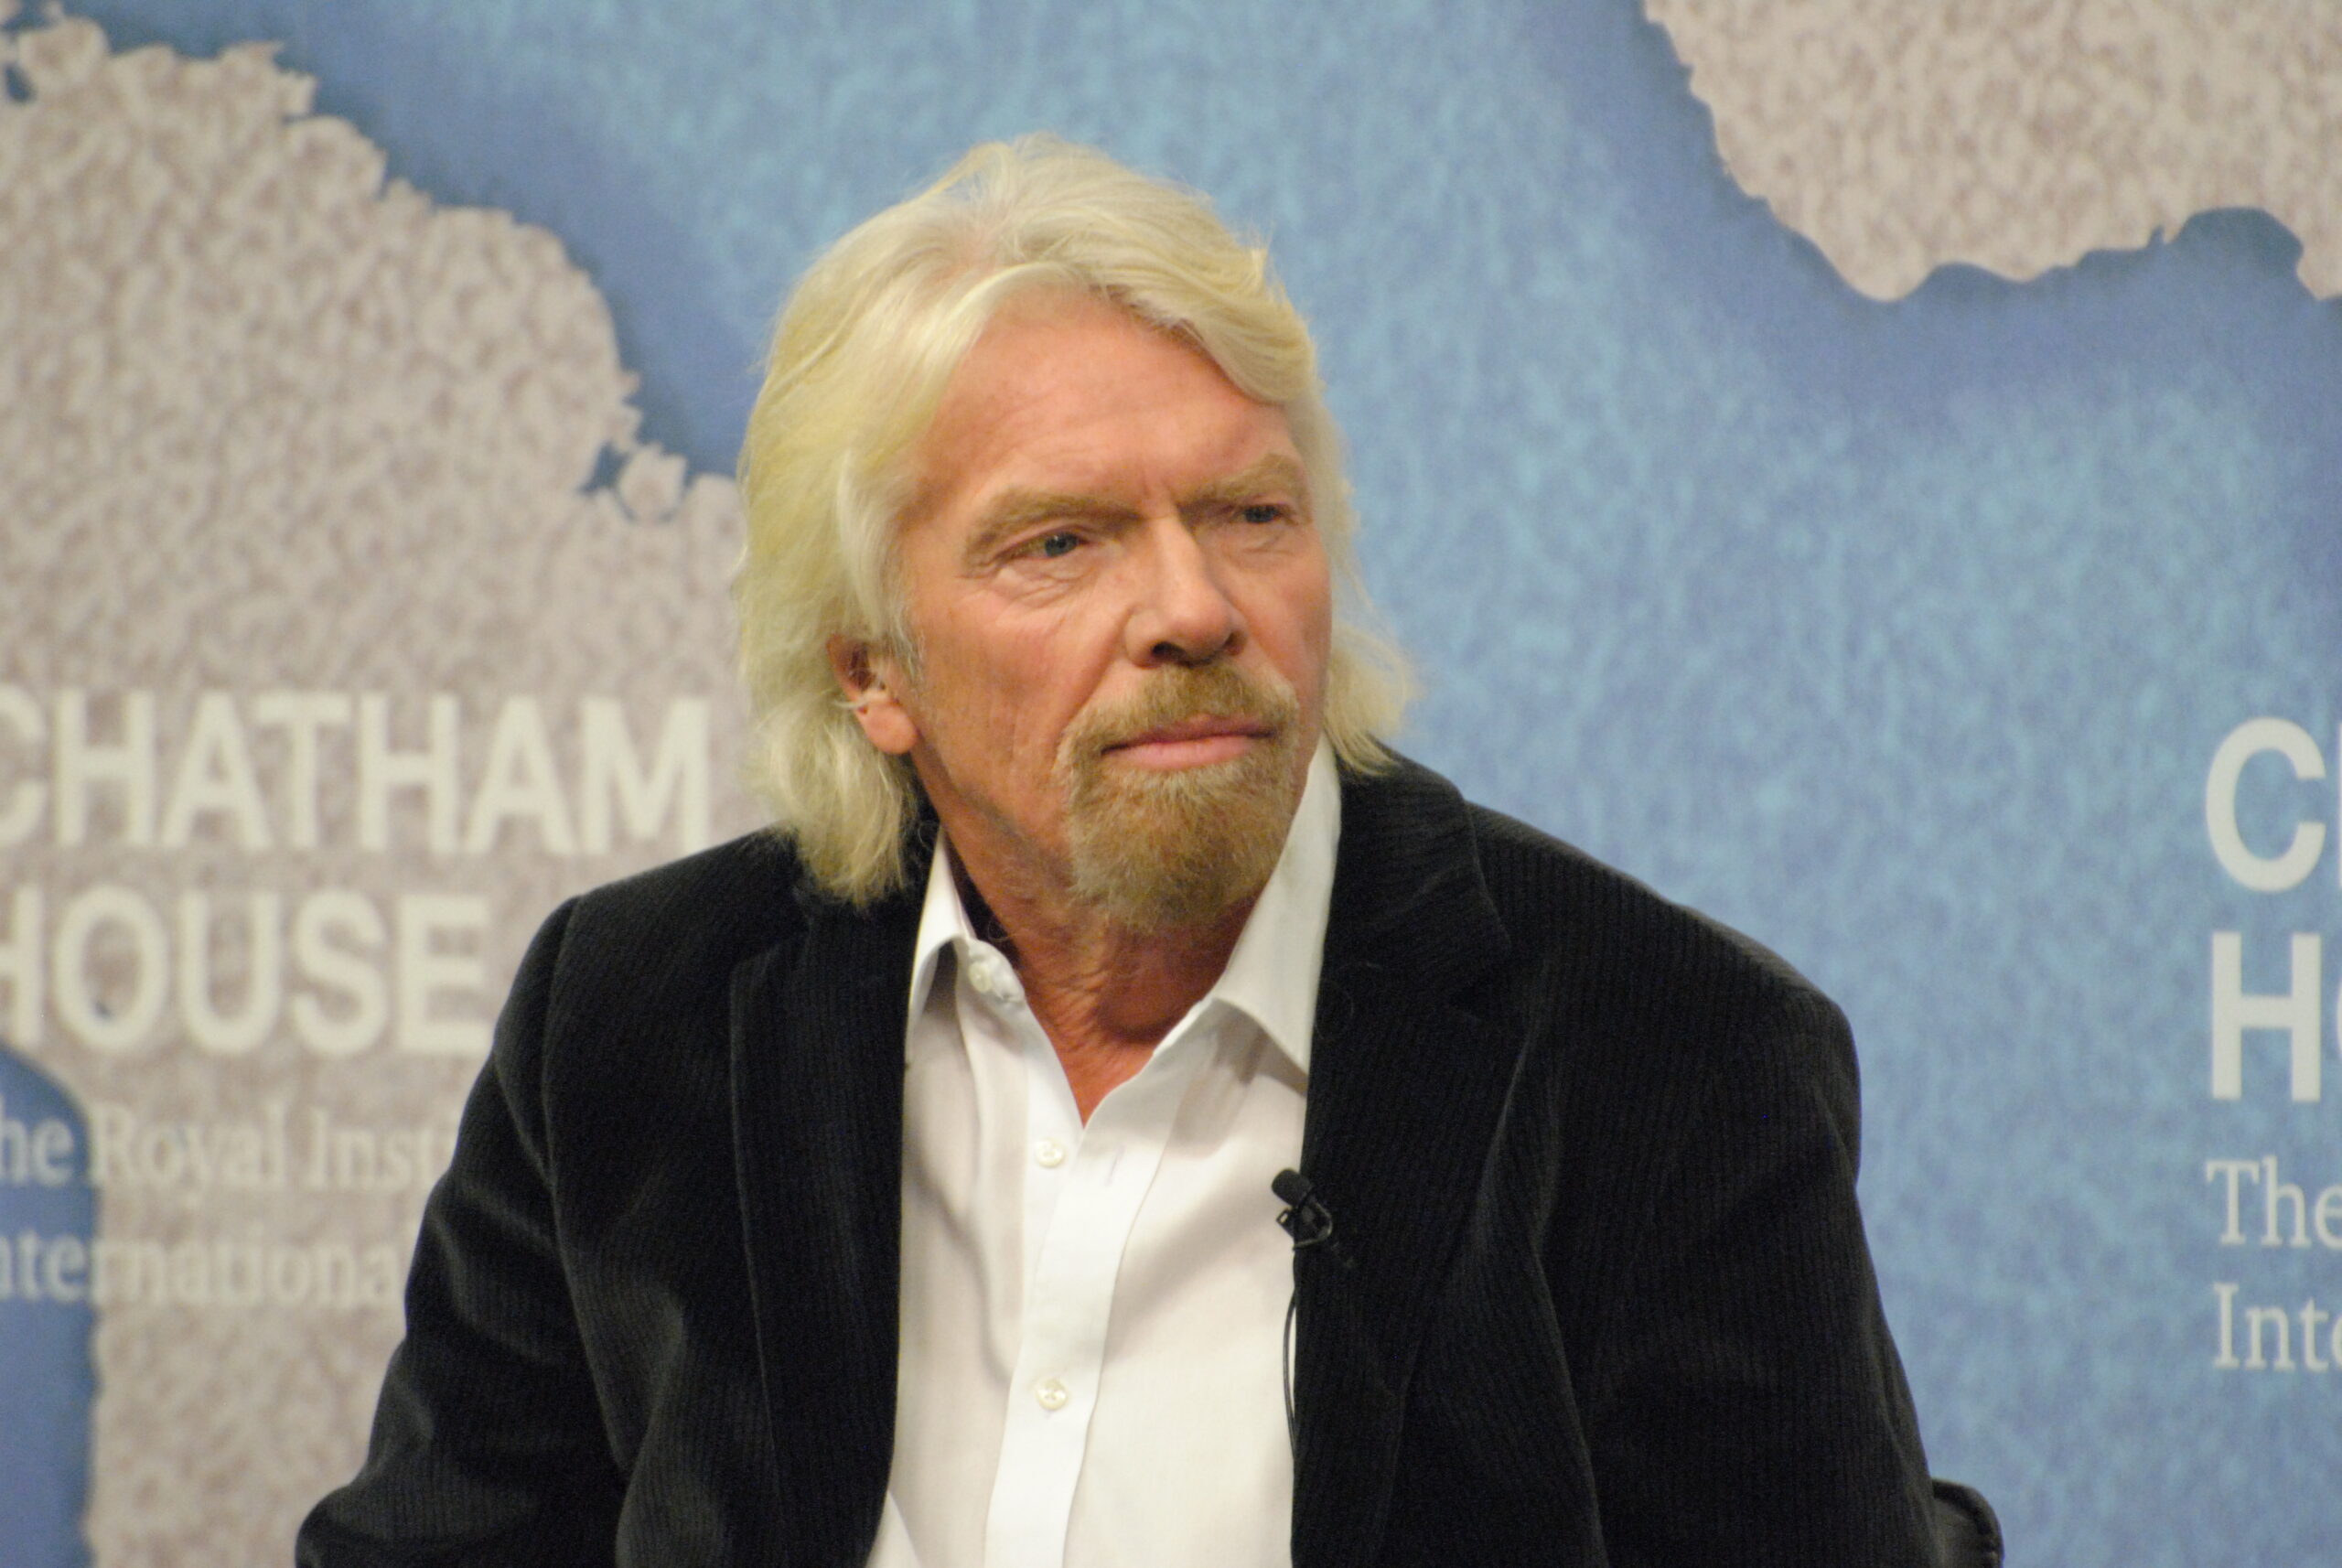 Virgin Orbit CEO Richard Branson Claims Human Spaceflight Is Around the Corner